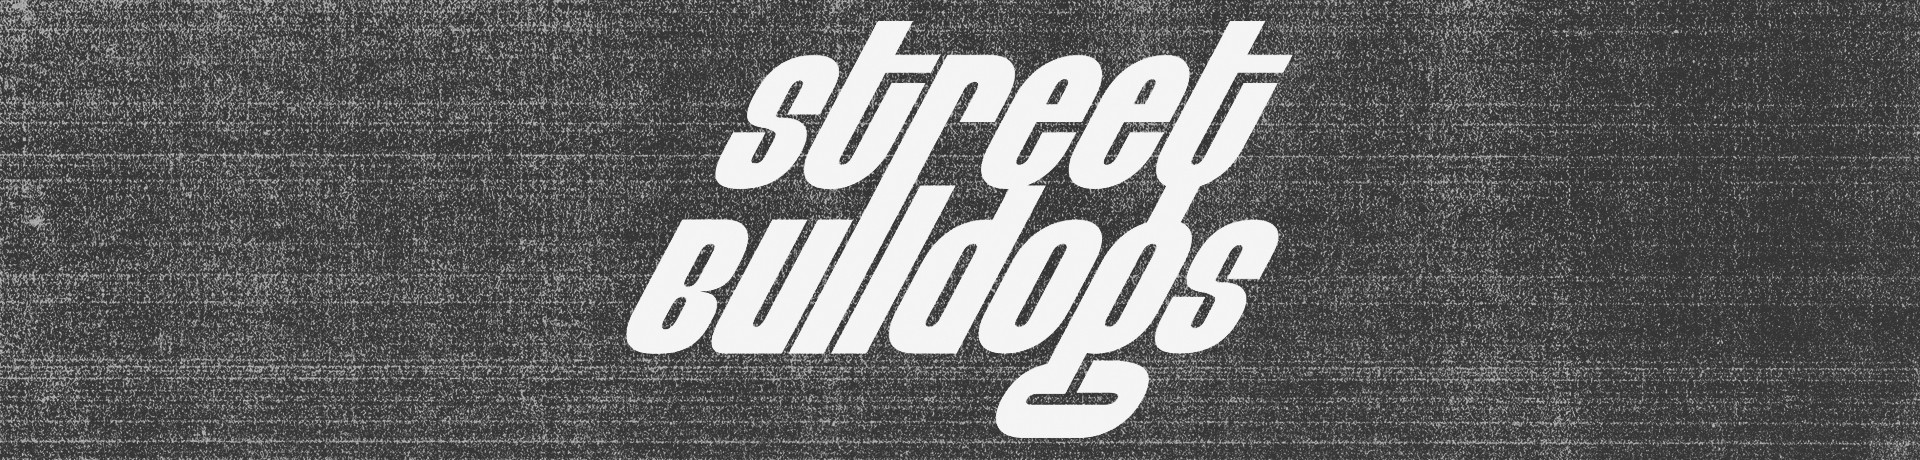 Street Bulldogs - Pindamonhangaba [Suedine Crewneck Manga Longa]